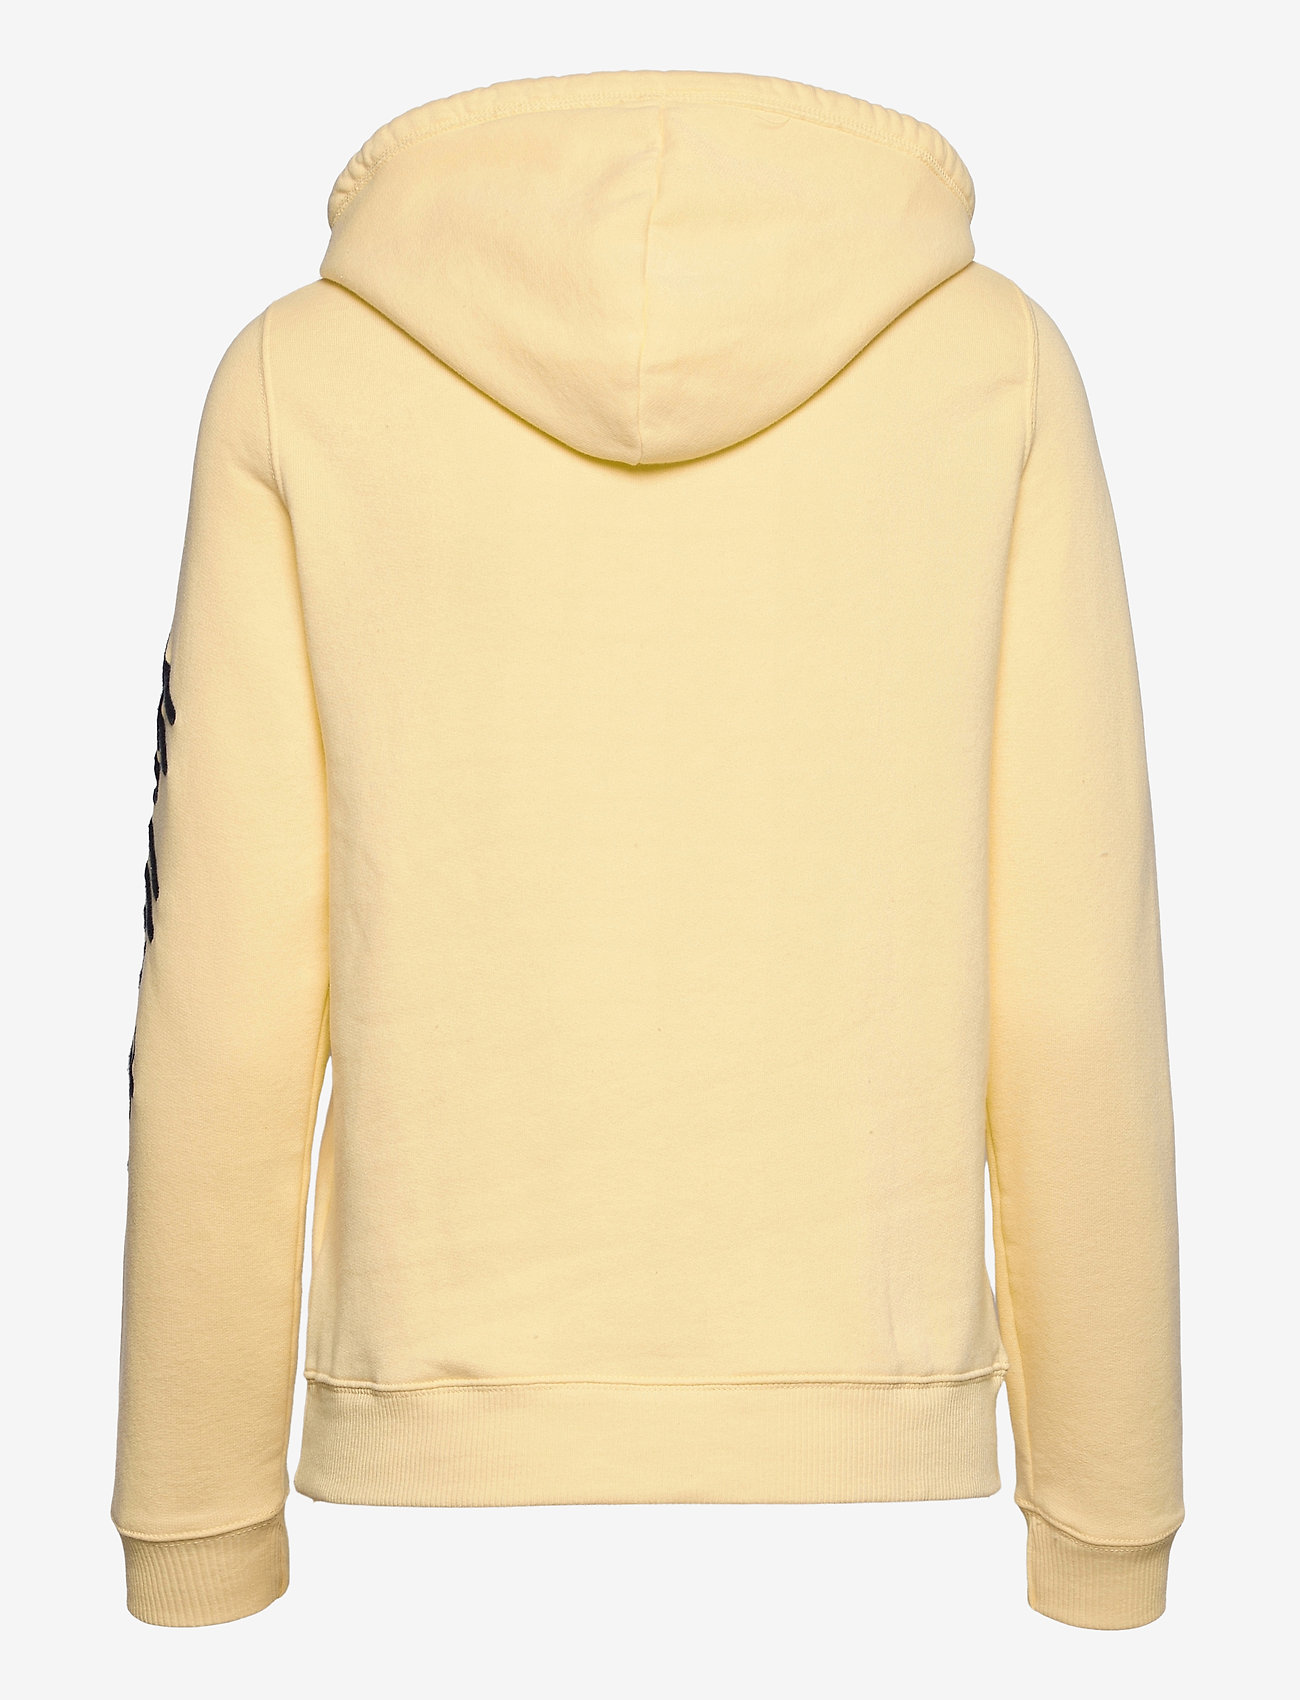 hollister yellow hoodie